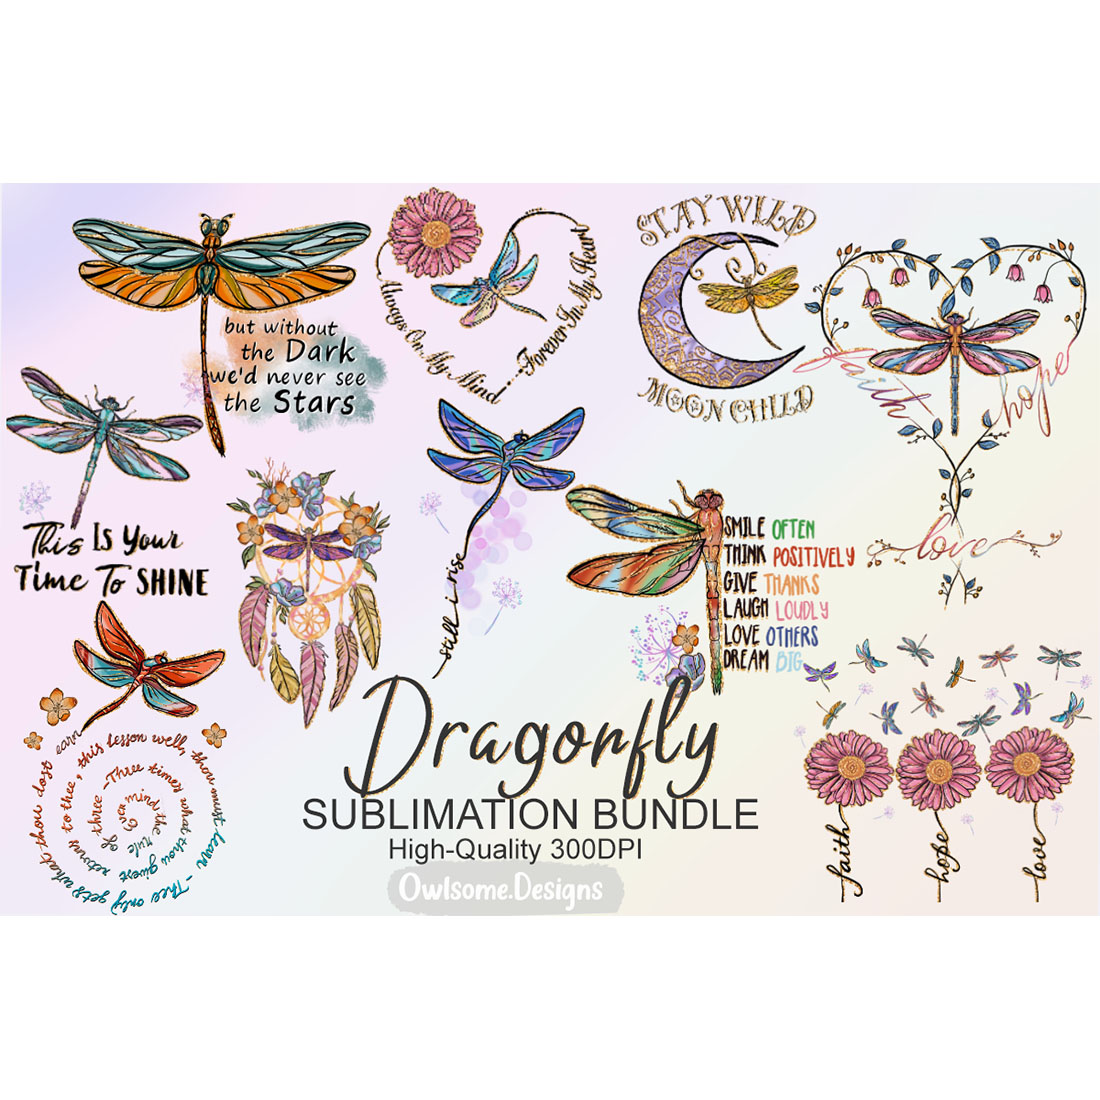 Dragonfly Sublimation Bundle PNG cover image.